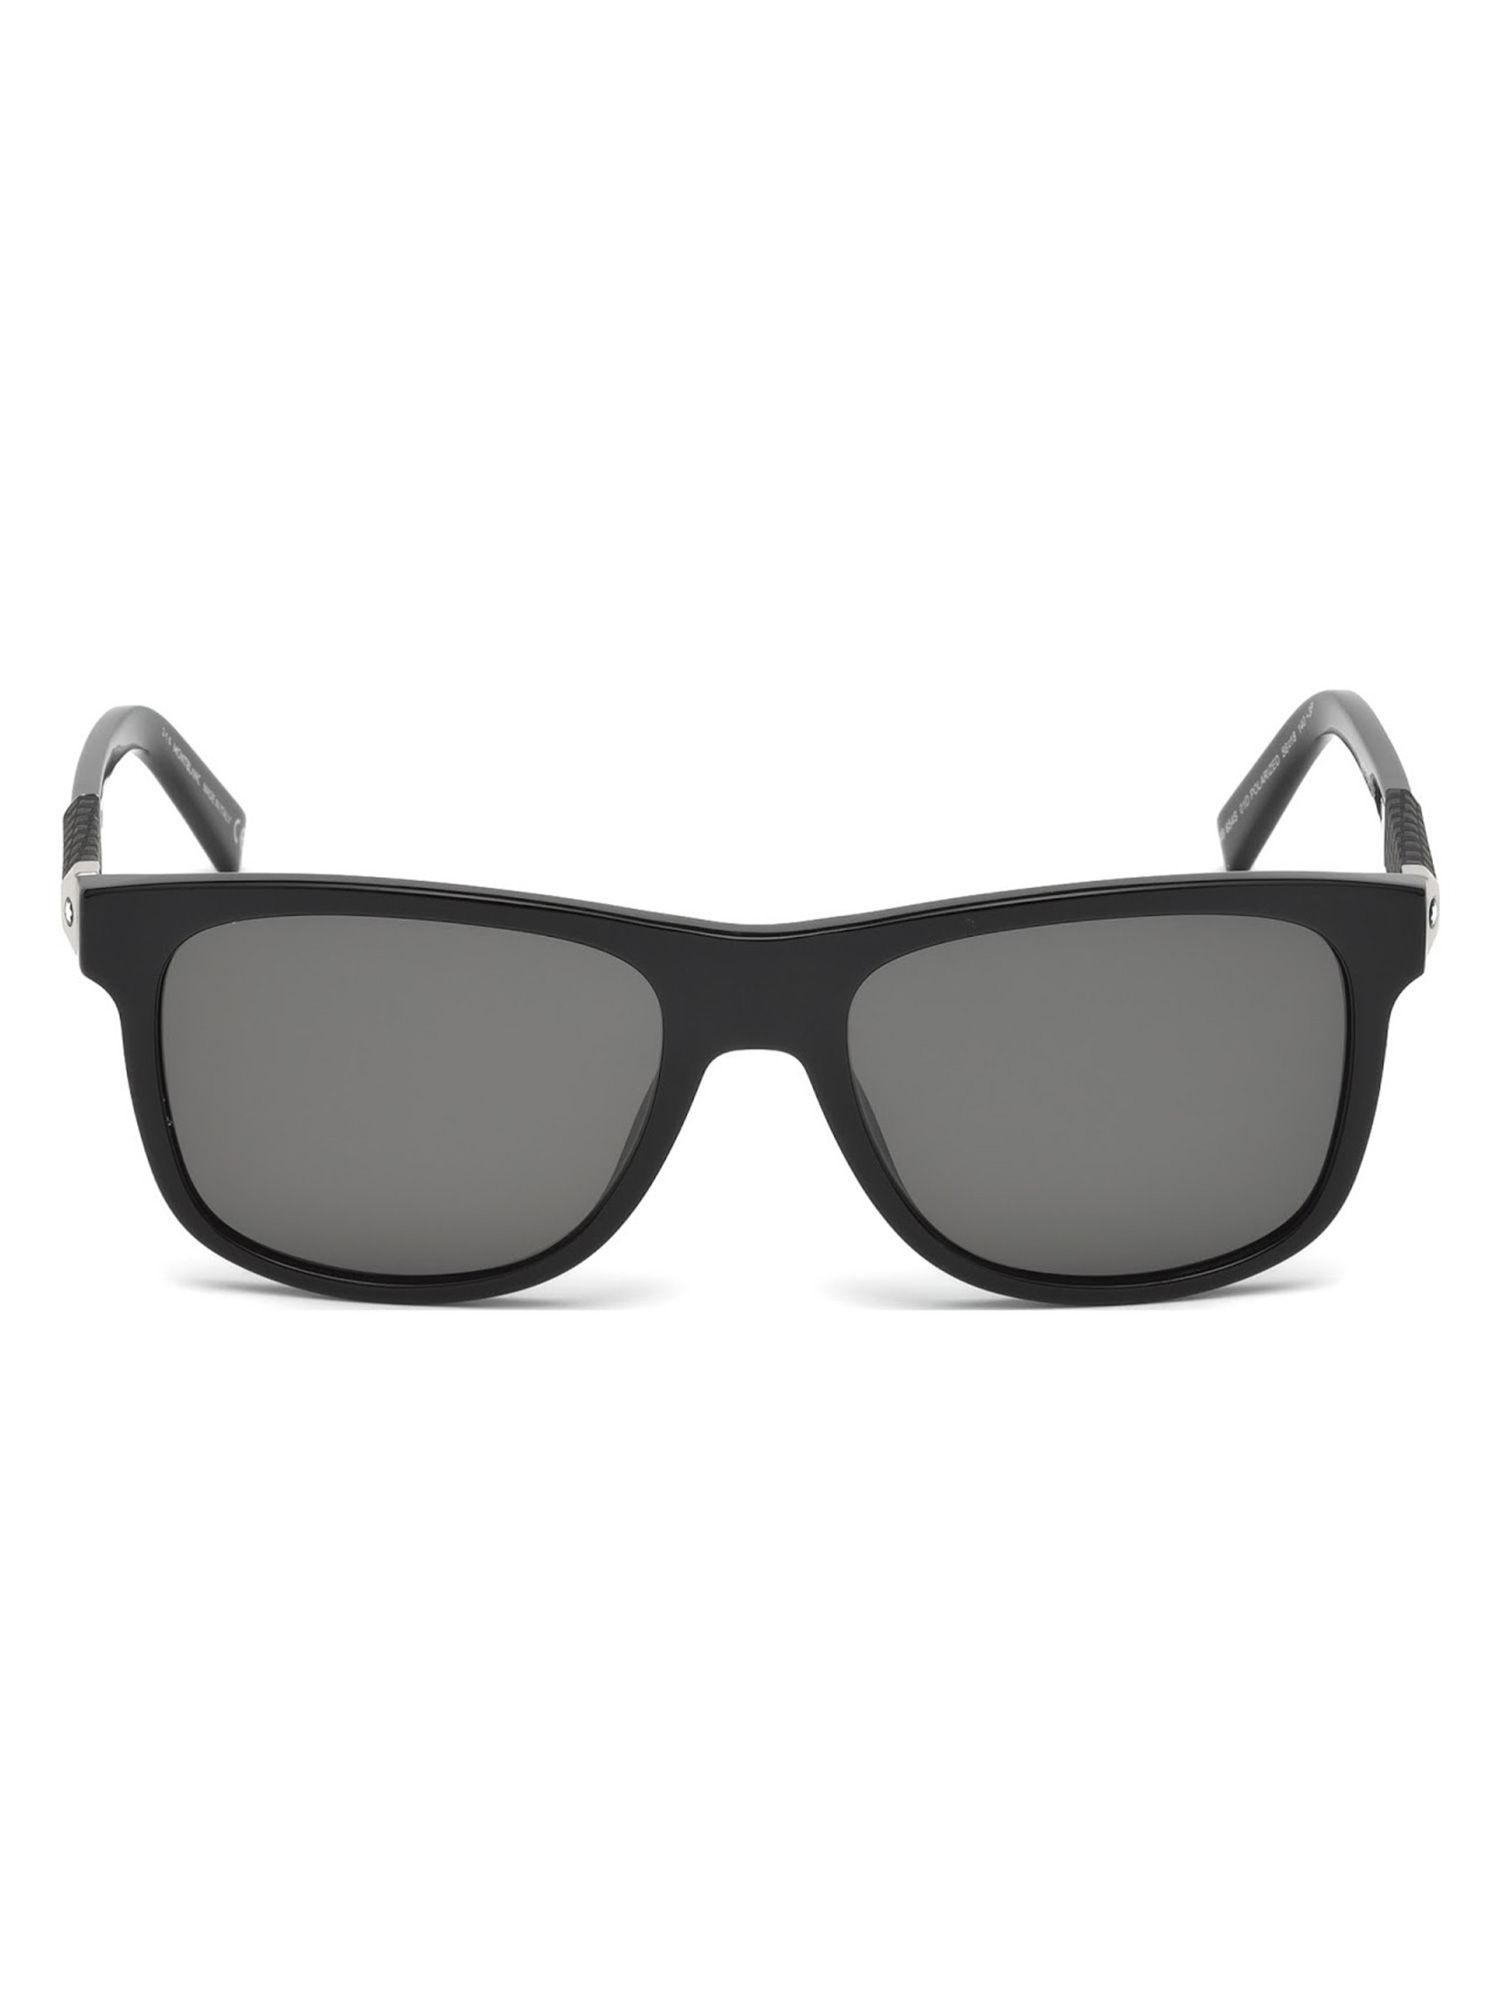 grey plastic sunglasses